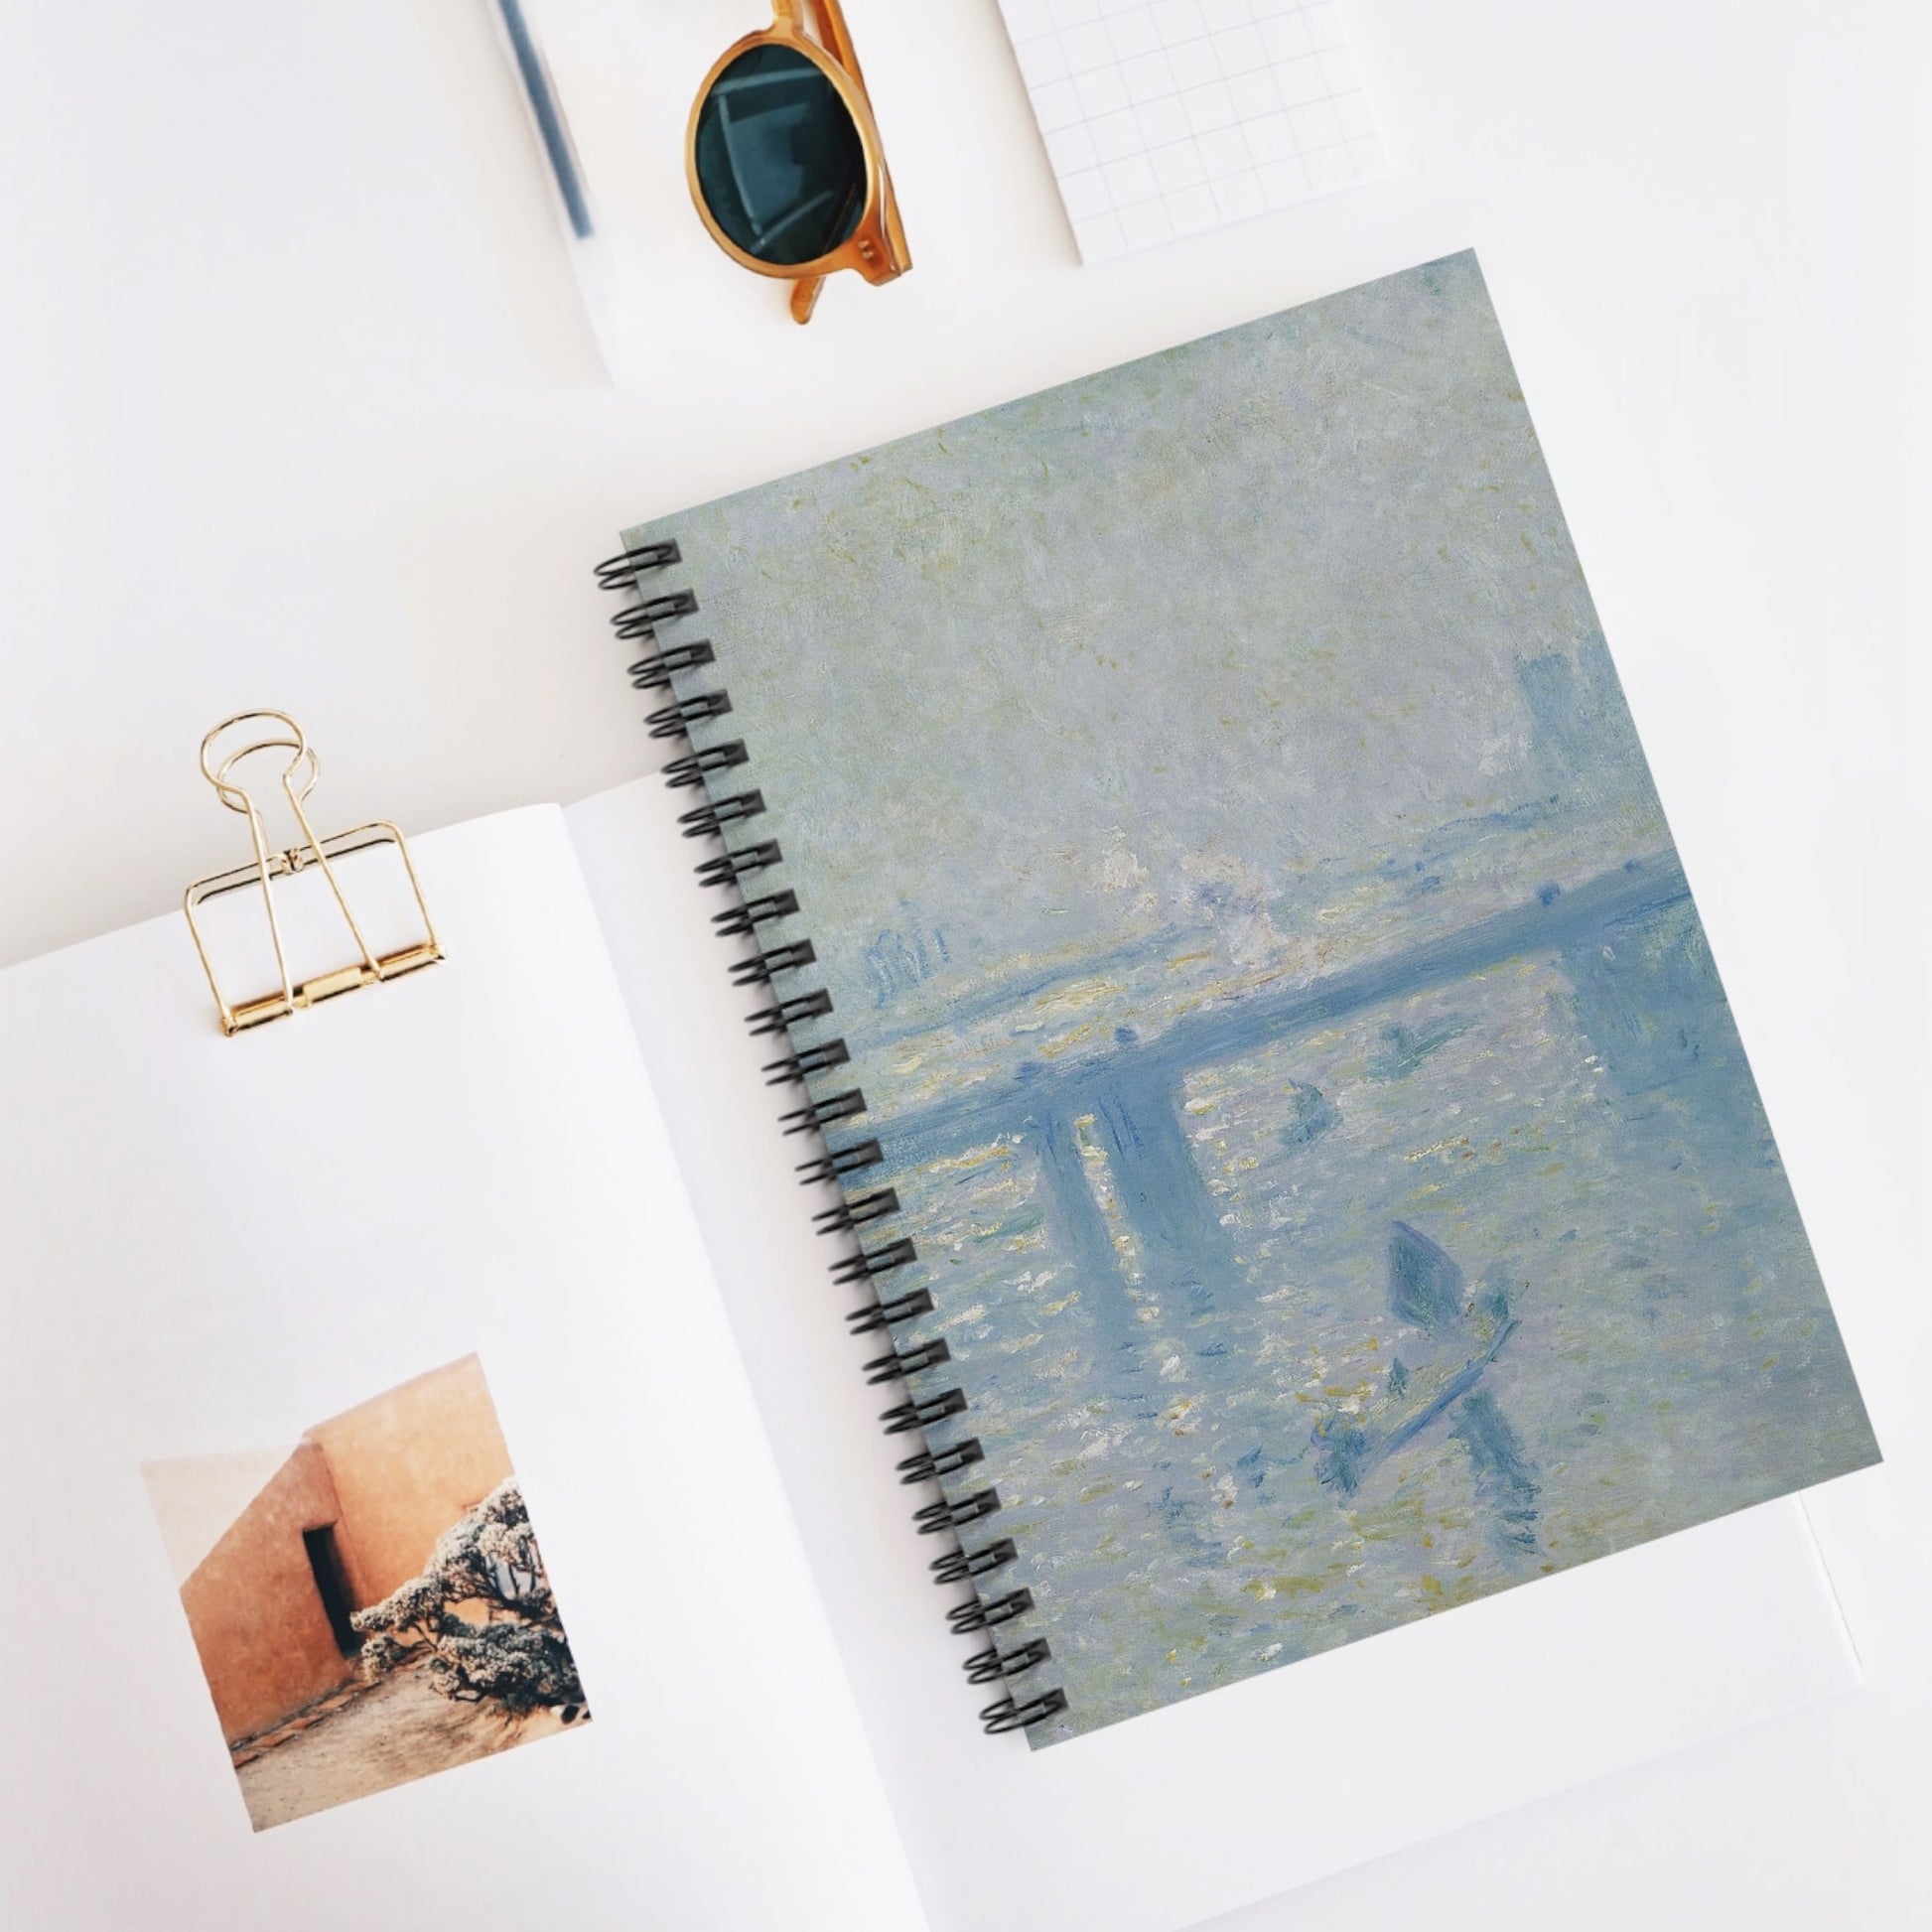 Dusty Light Blue Spiral Notebook Displayed on Desk